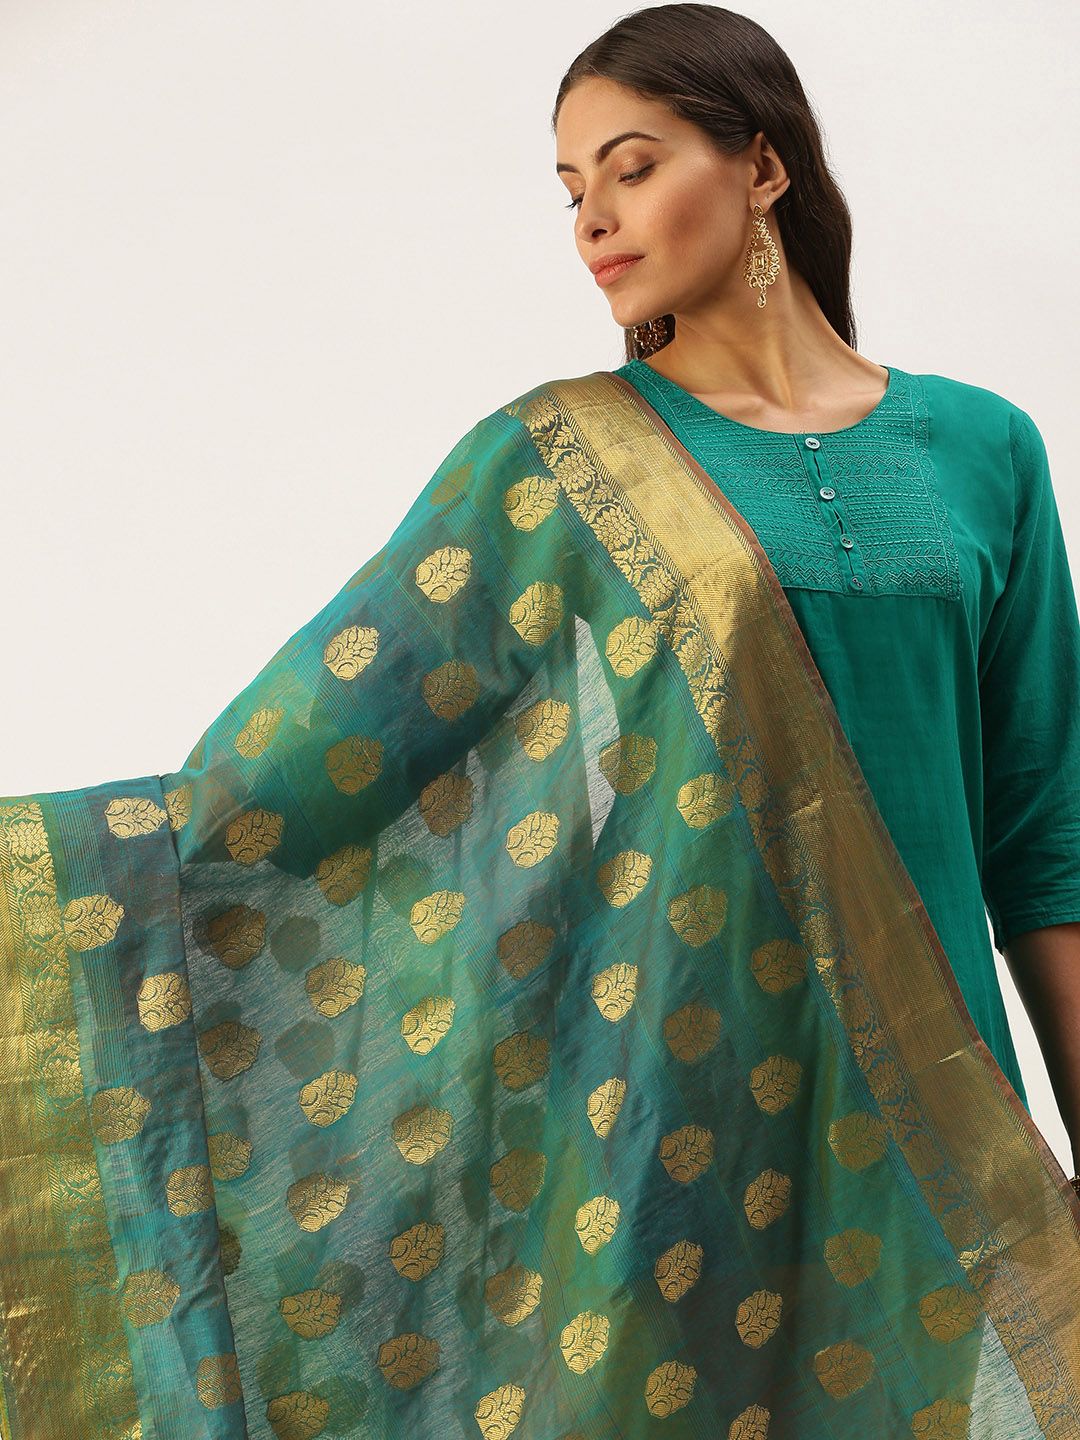 SWAGG INDIA Teal Ethnic Motifs Woven Design Art Silk Dupatta with Zari Price in India